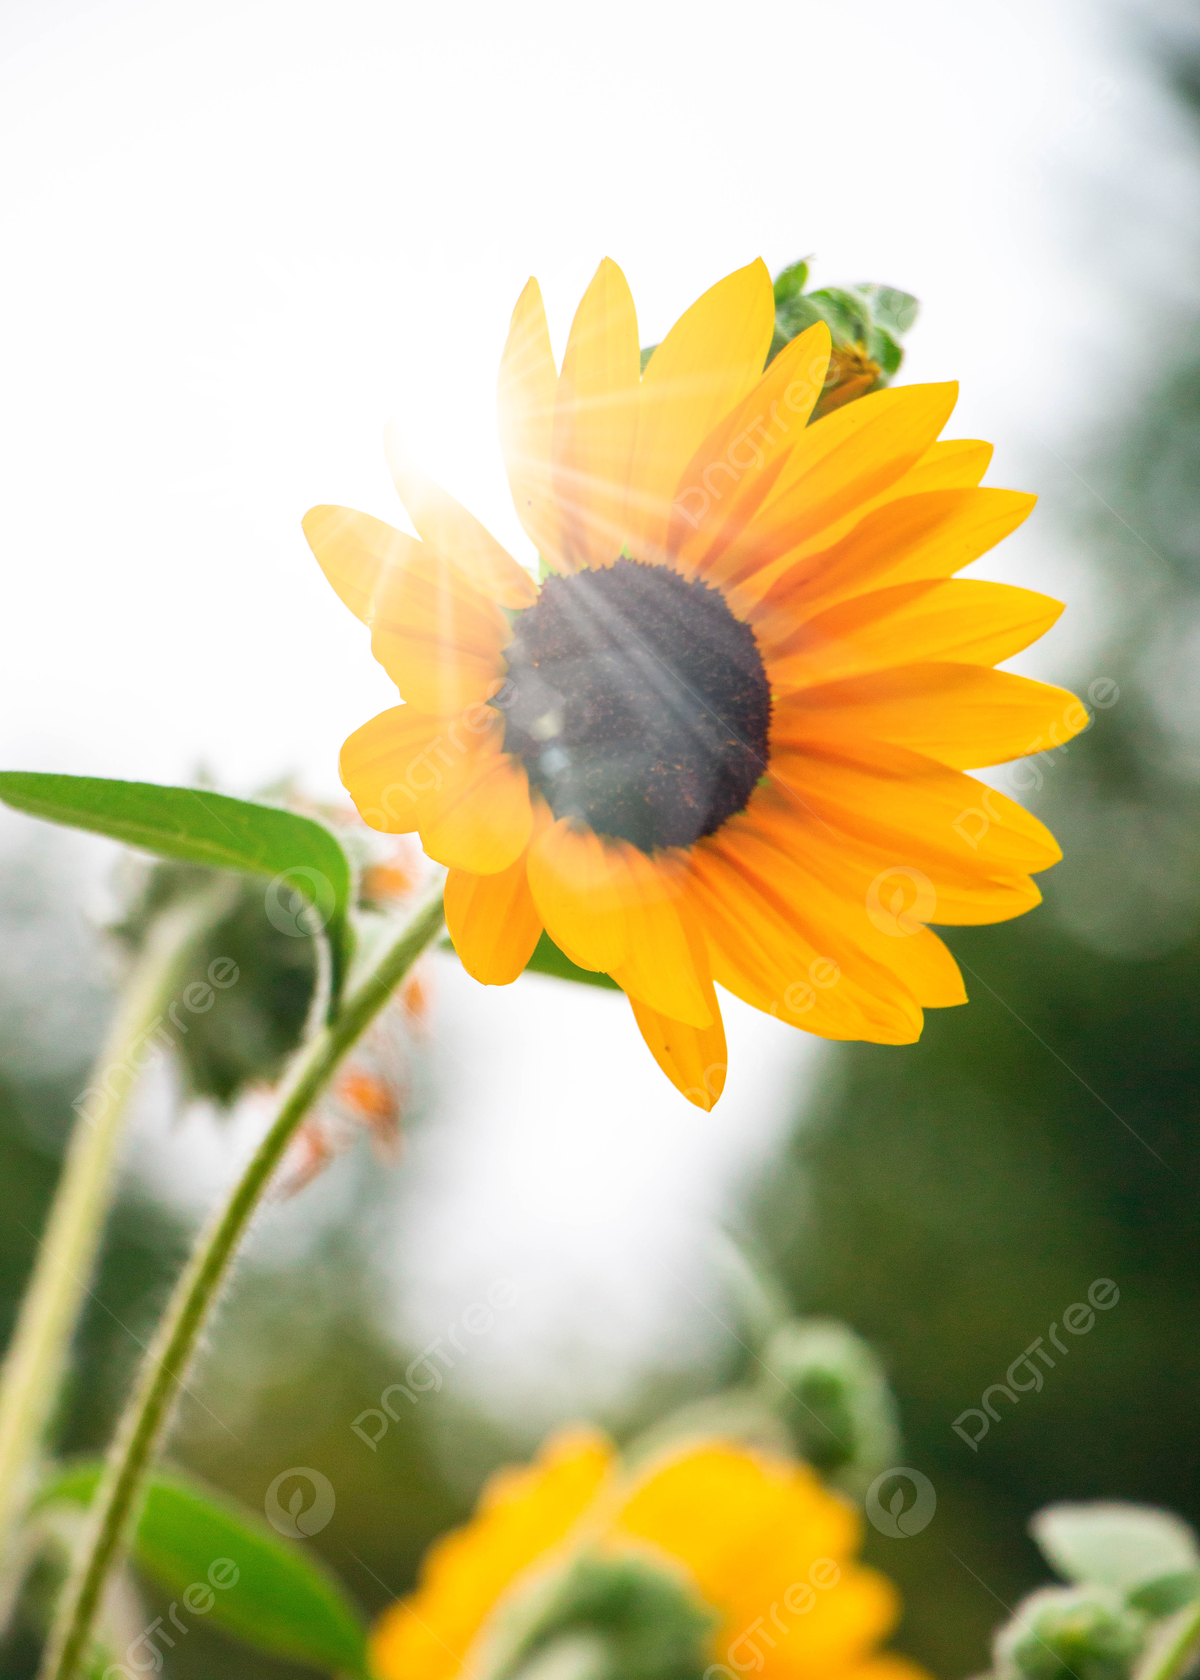 Wallpaper Sunflower Background